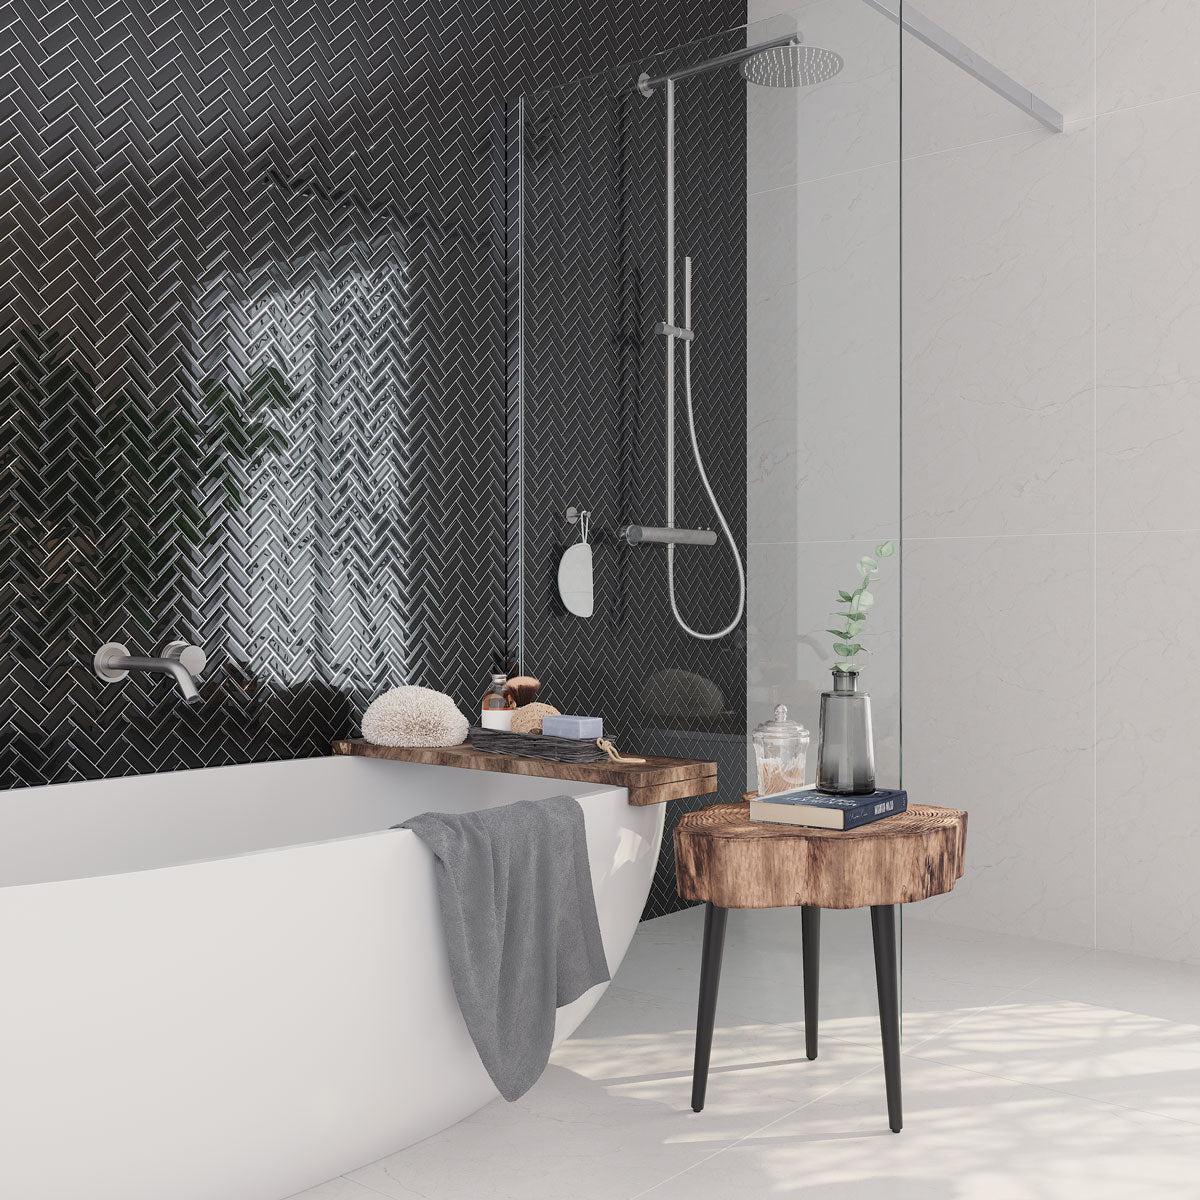 Obsidian Black Glass Herringbone Tile Wall for a Modern Bathroom Tub Surround